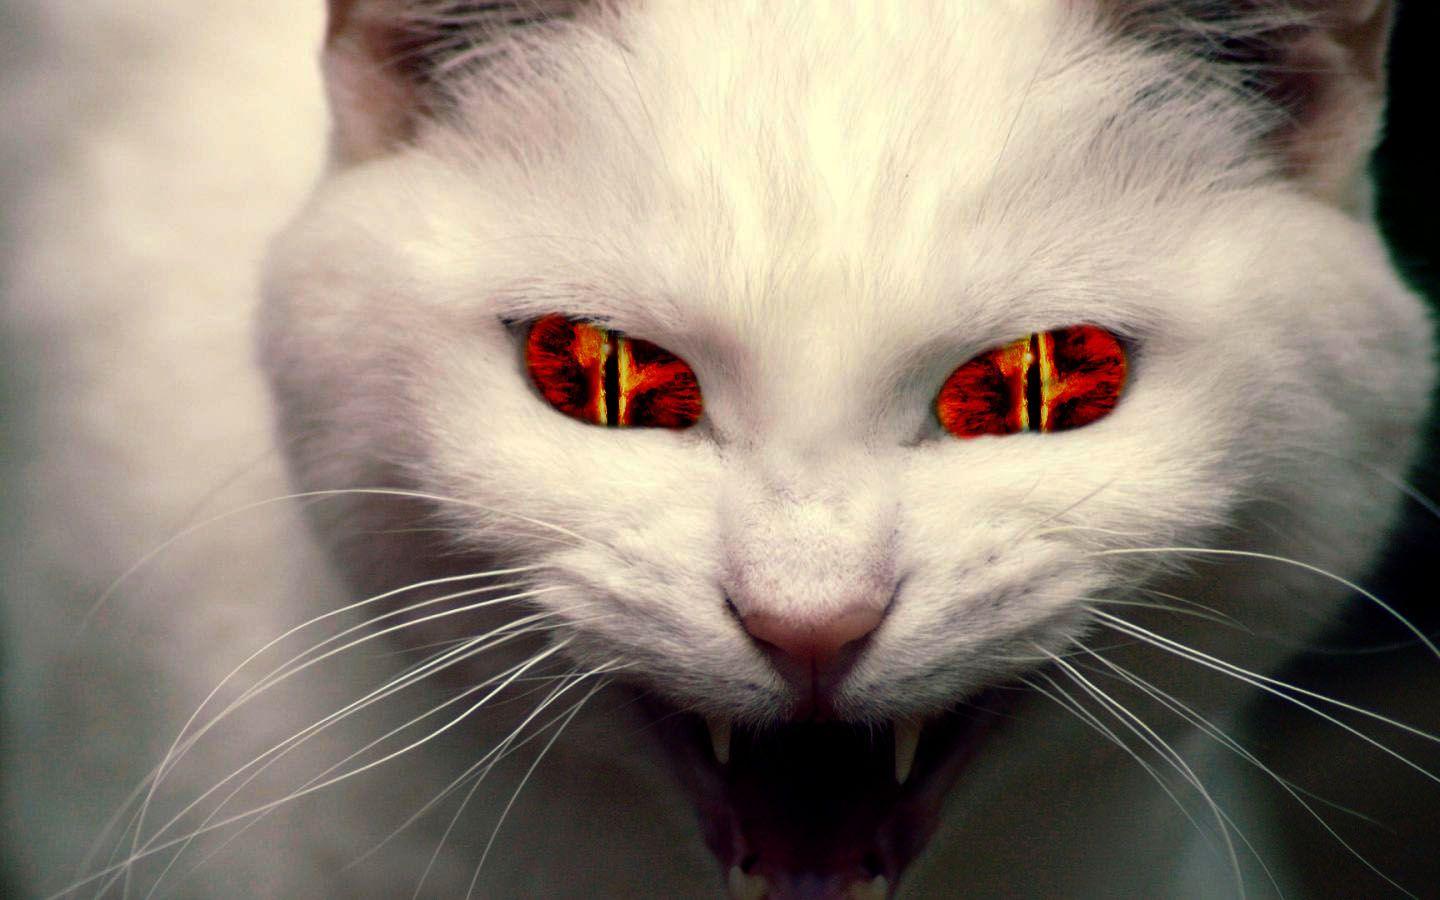 evil anime cat